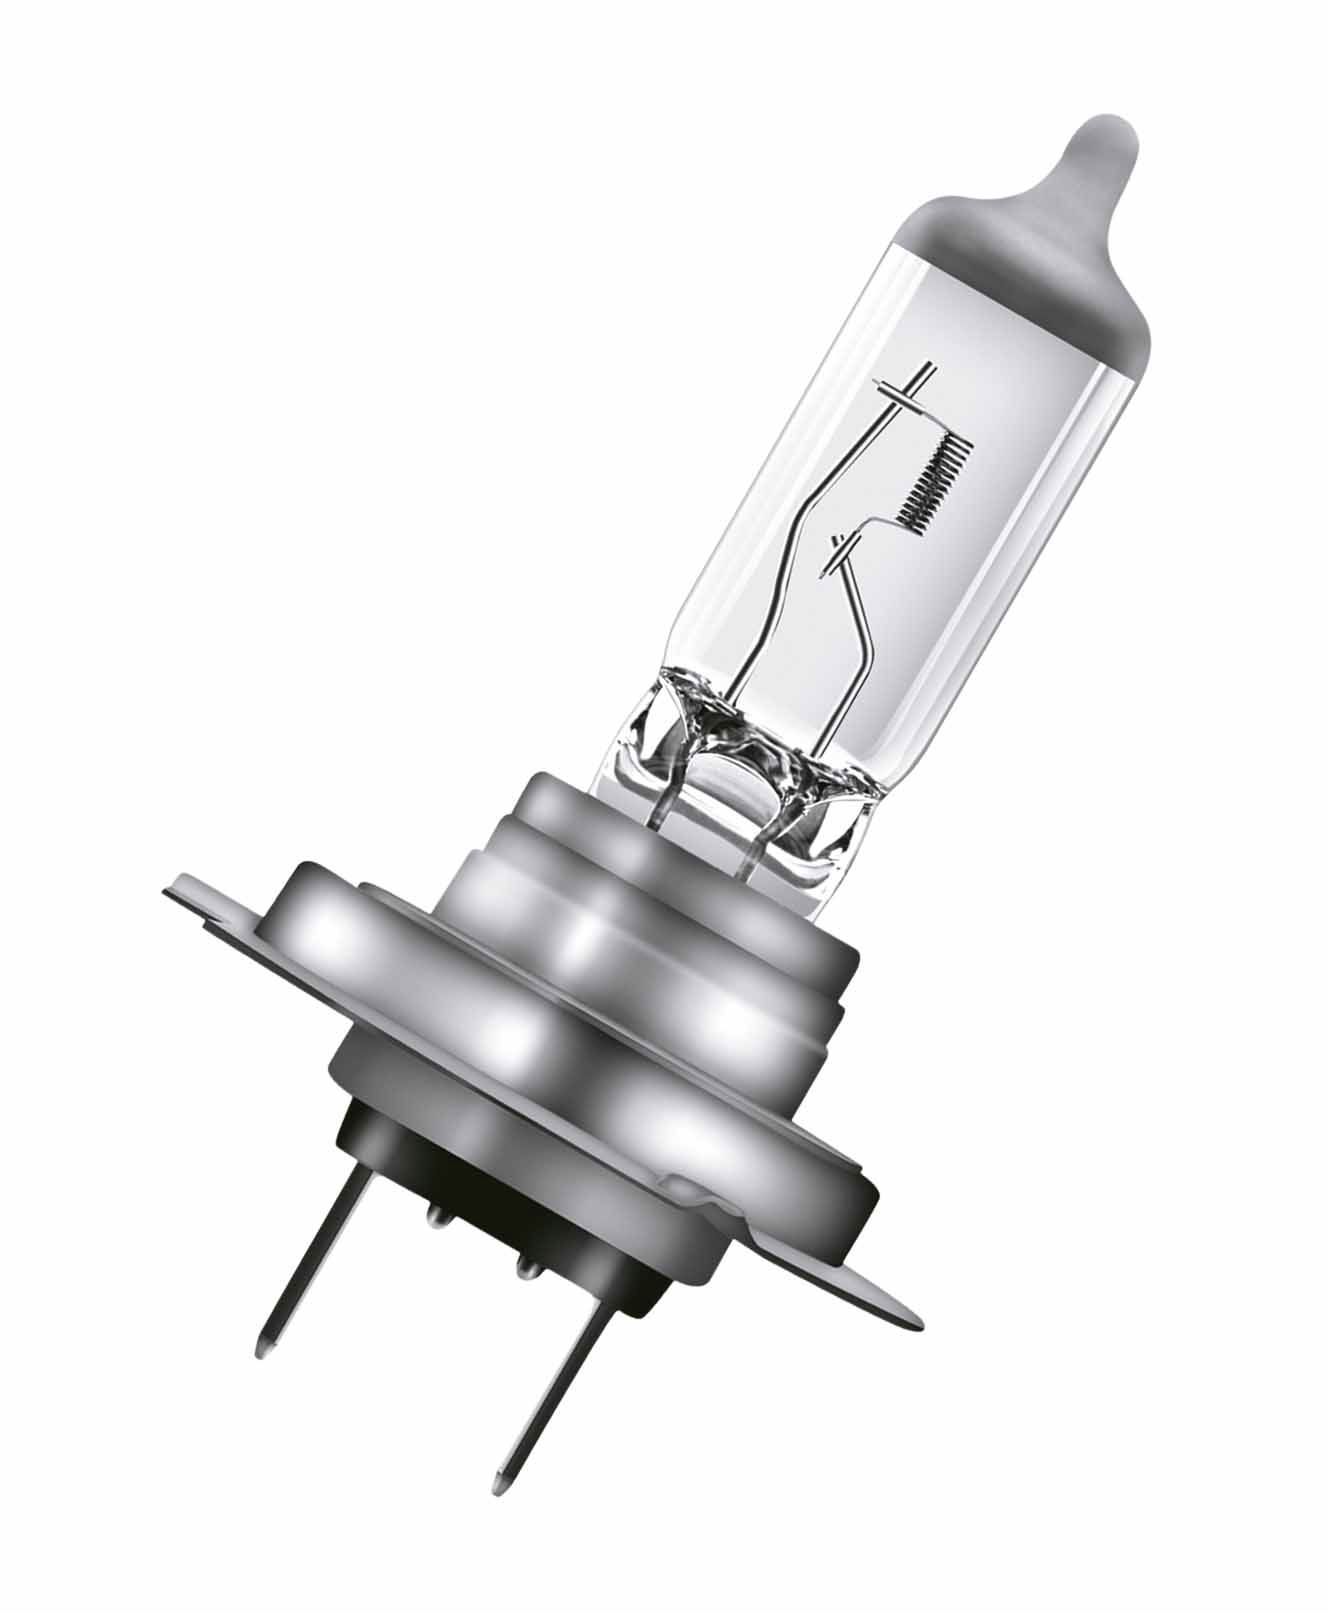 XEMARK KFZ-Ersatzleuchte H7 Xenon Optik Lampe Abblendlicht, 55W